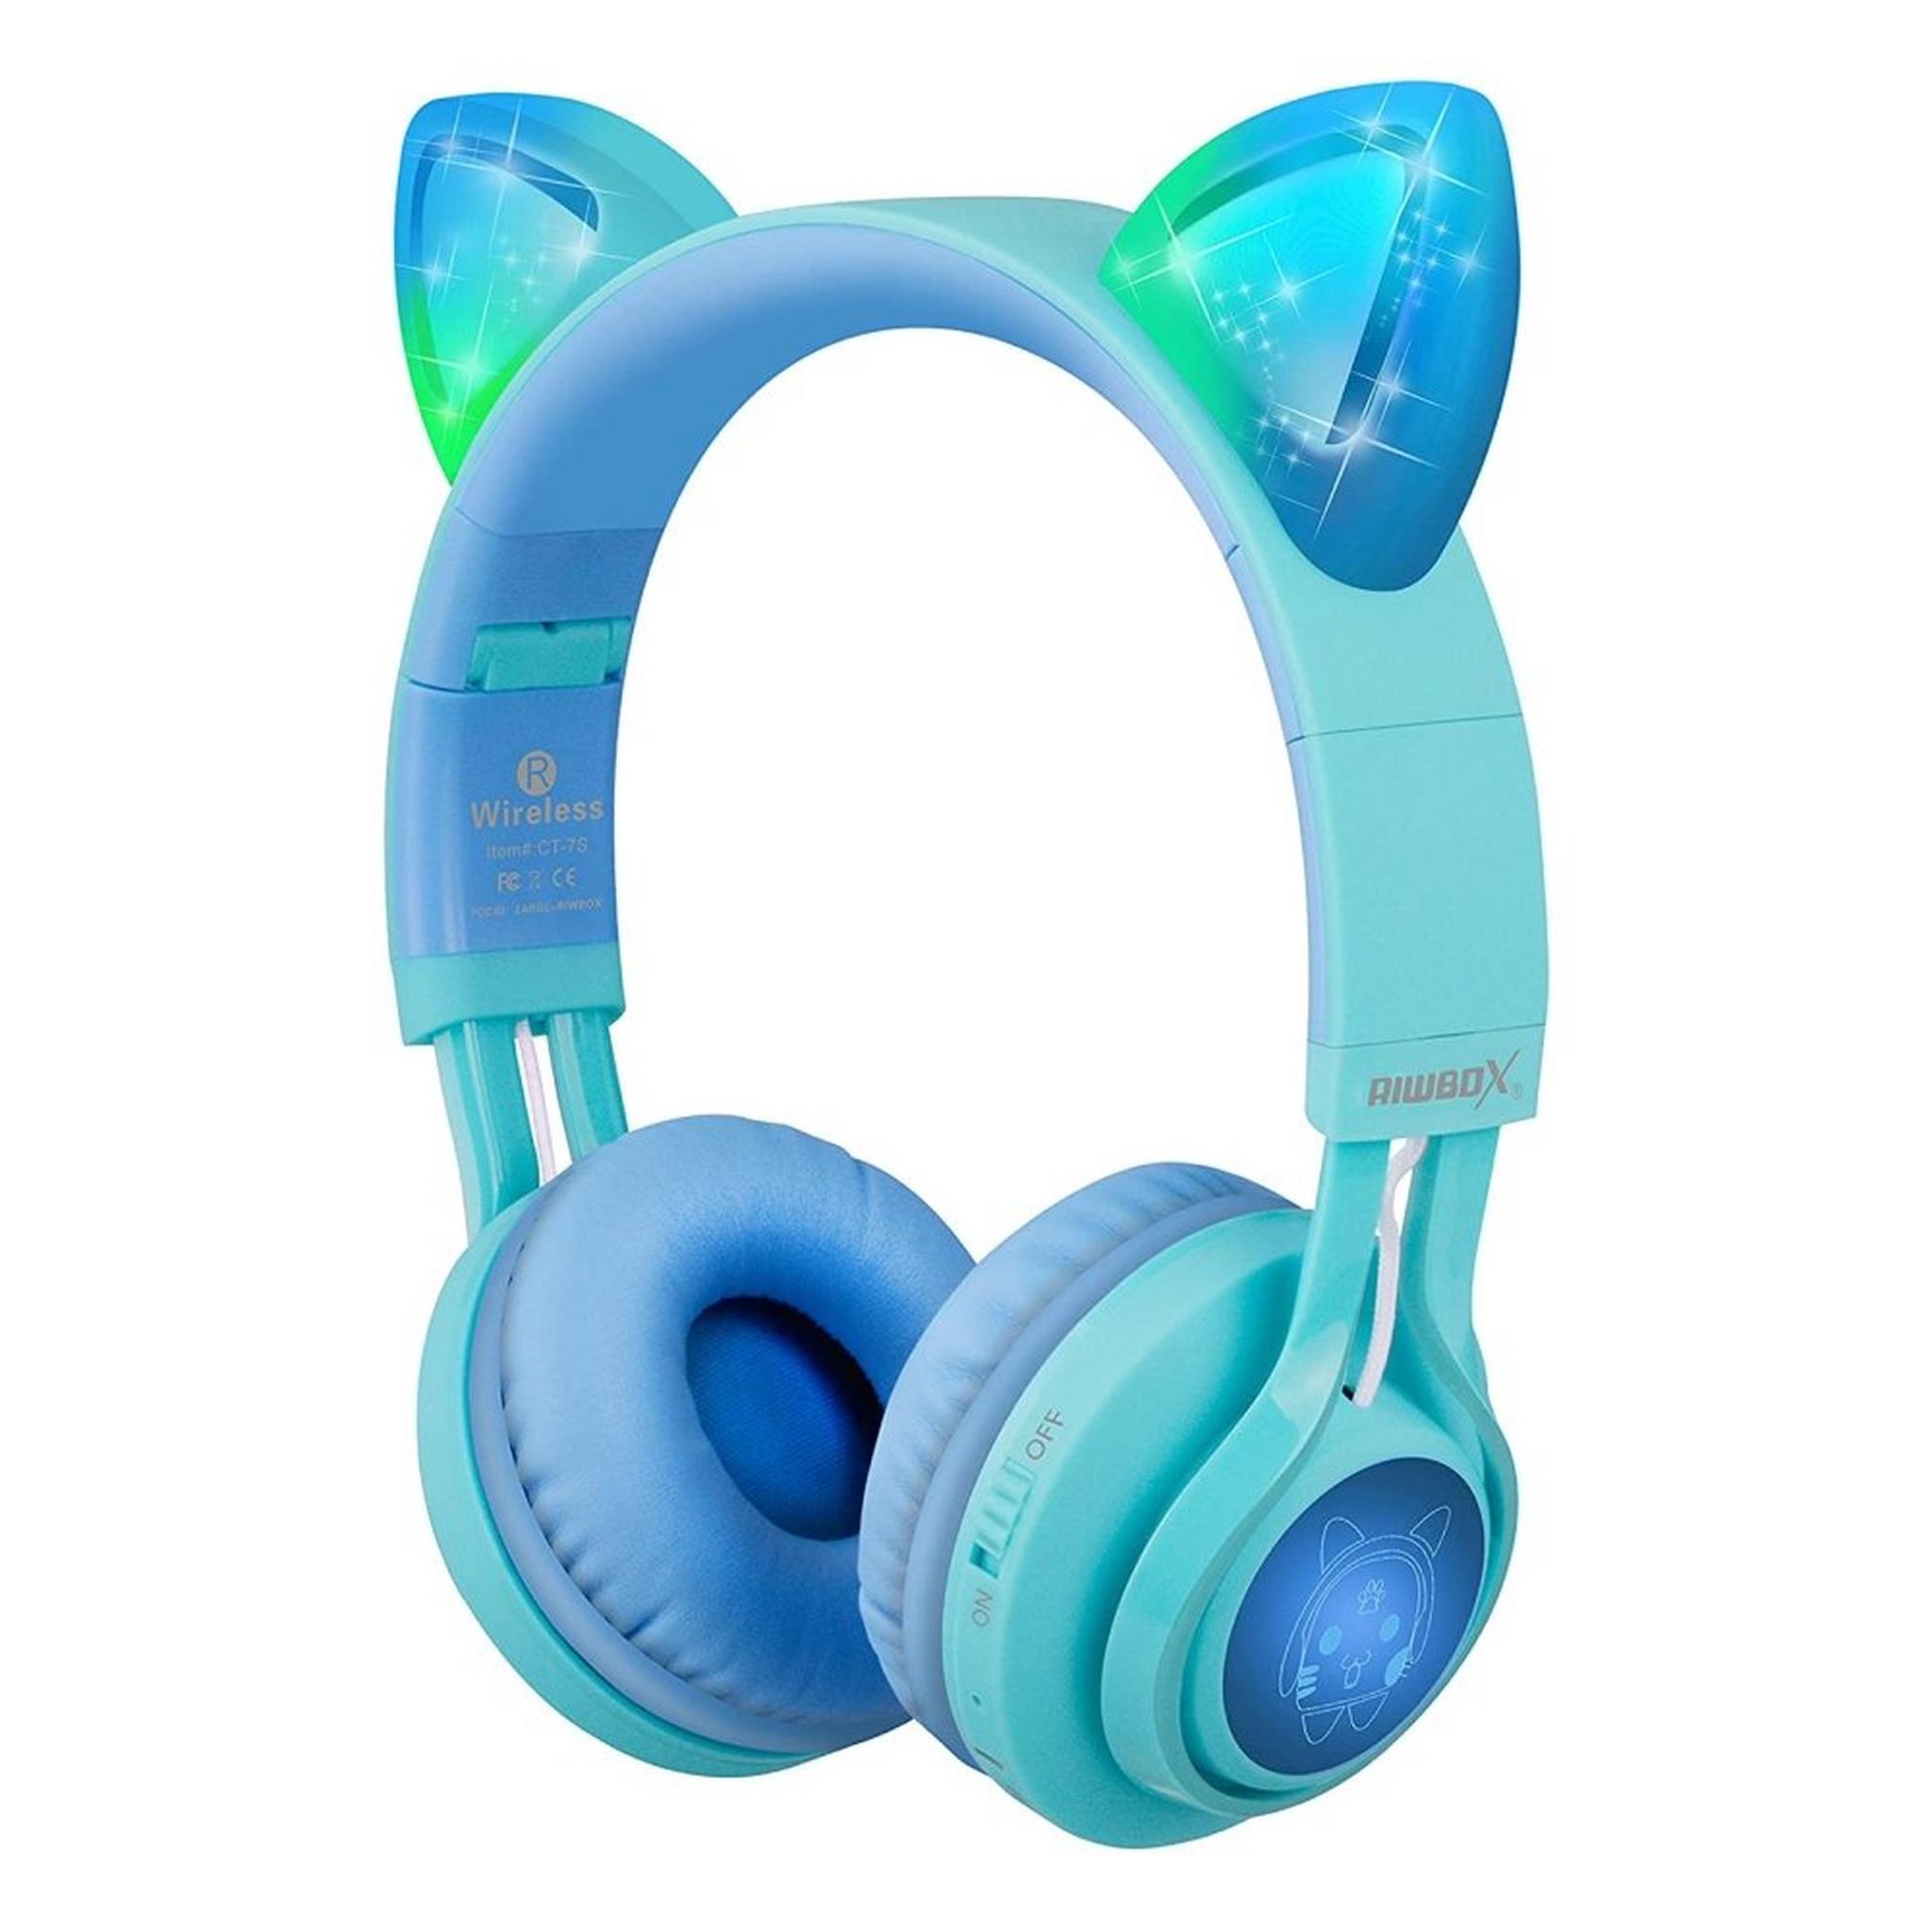 Riwbox Cat Ears Kids Bluetooth Headphones - Blue/Green